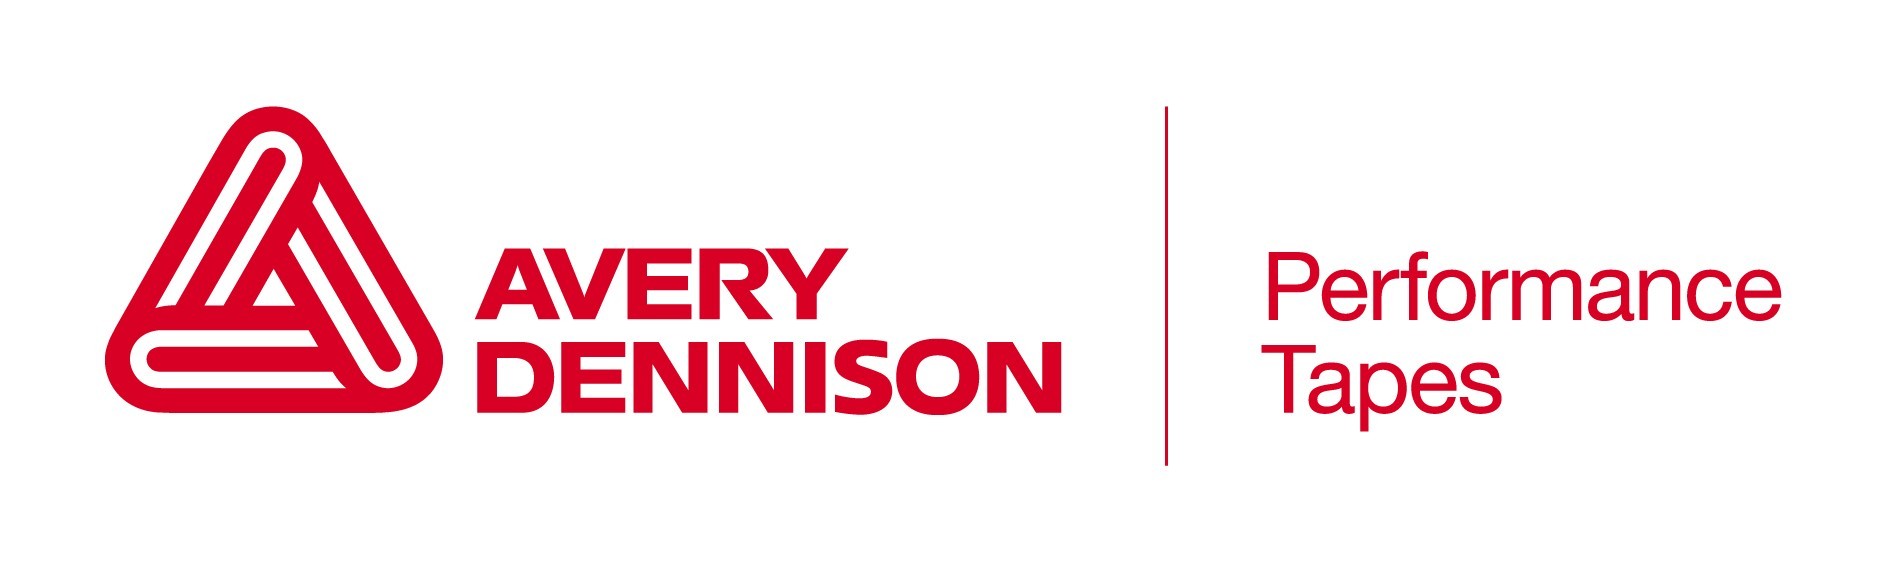 Avery Dennison logo 